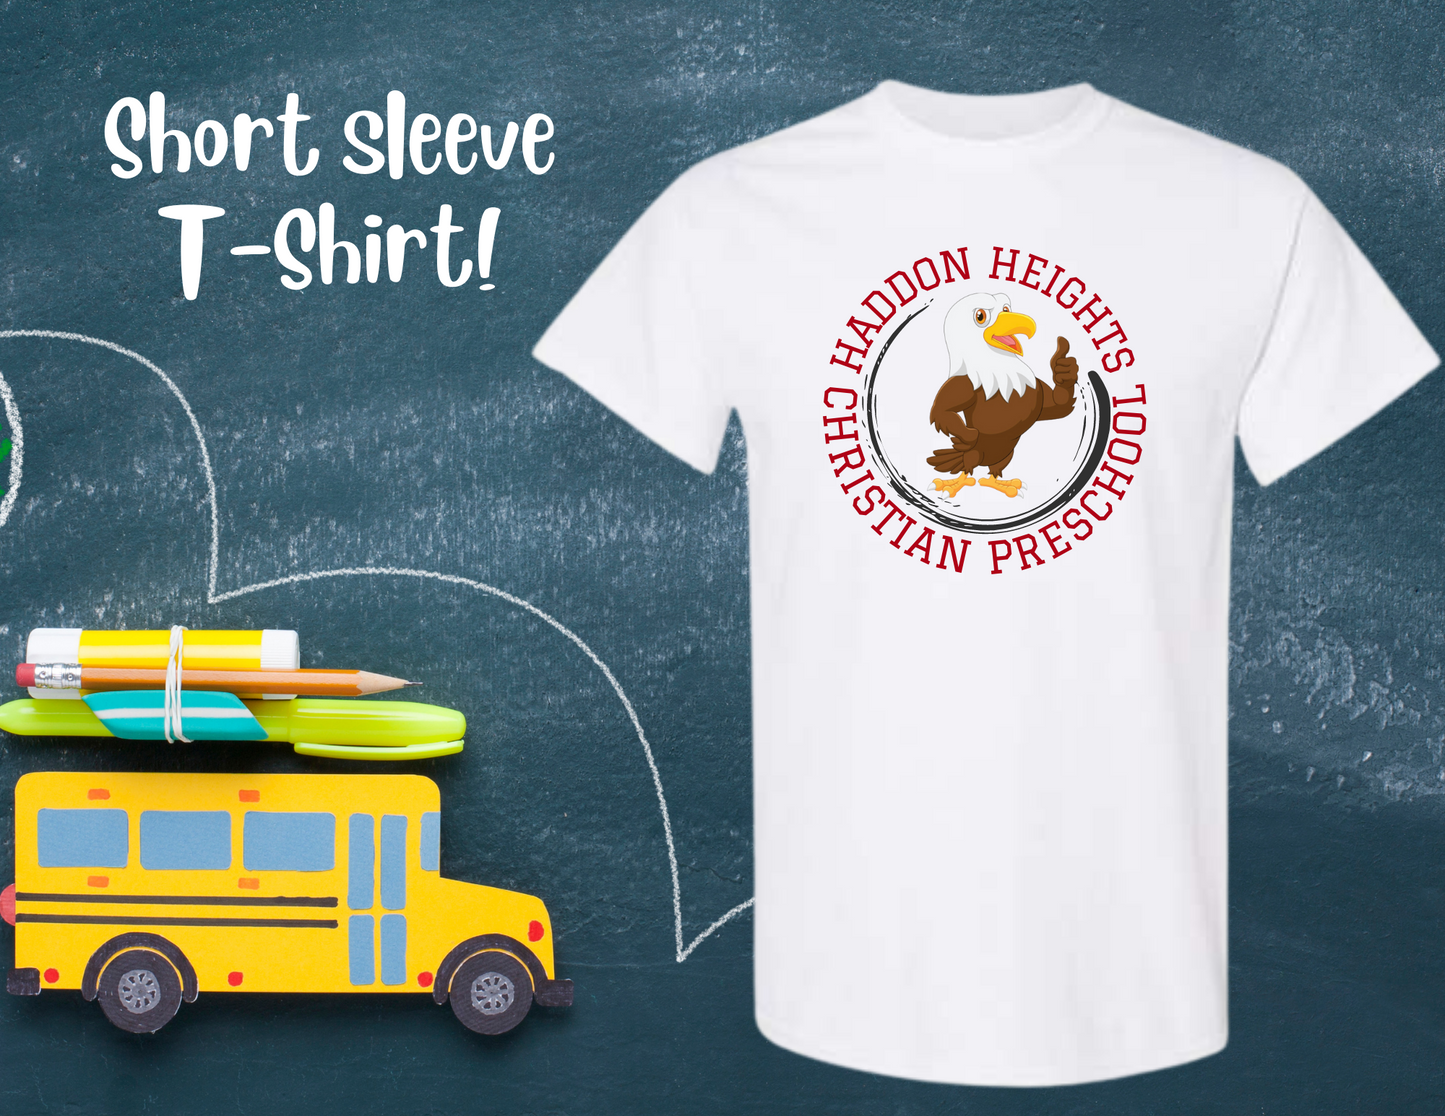 Haddon Heights Christian Preschool White T-shirt